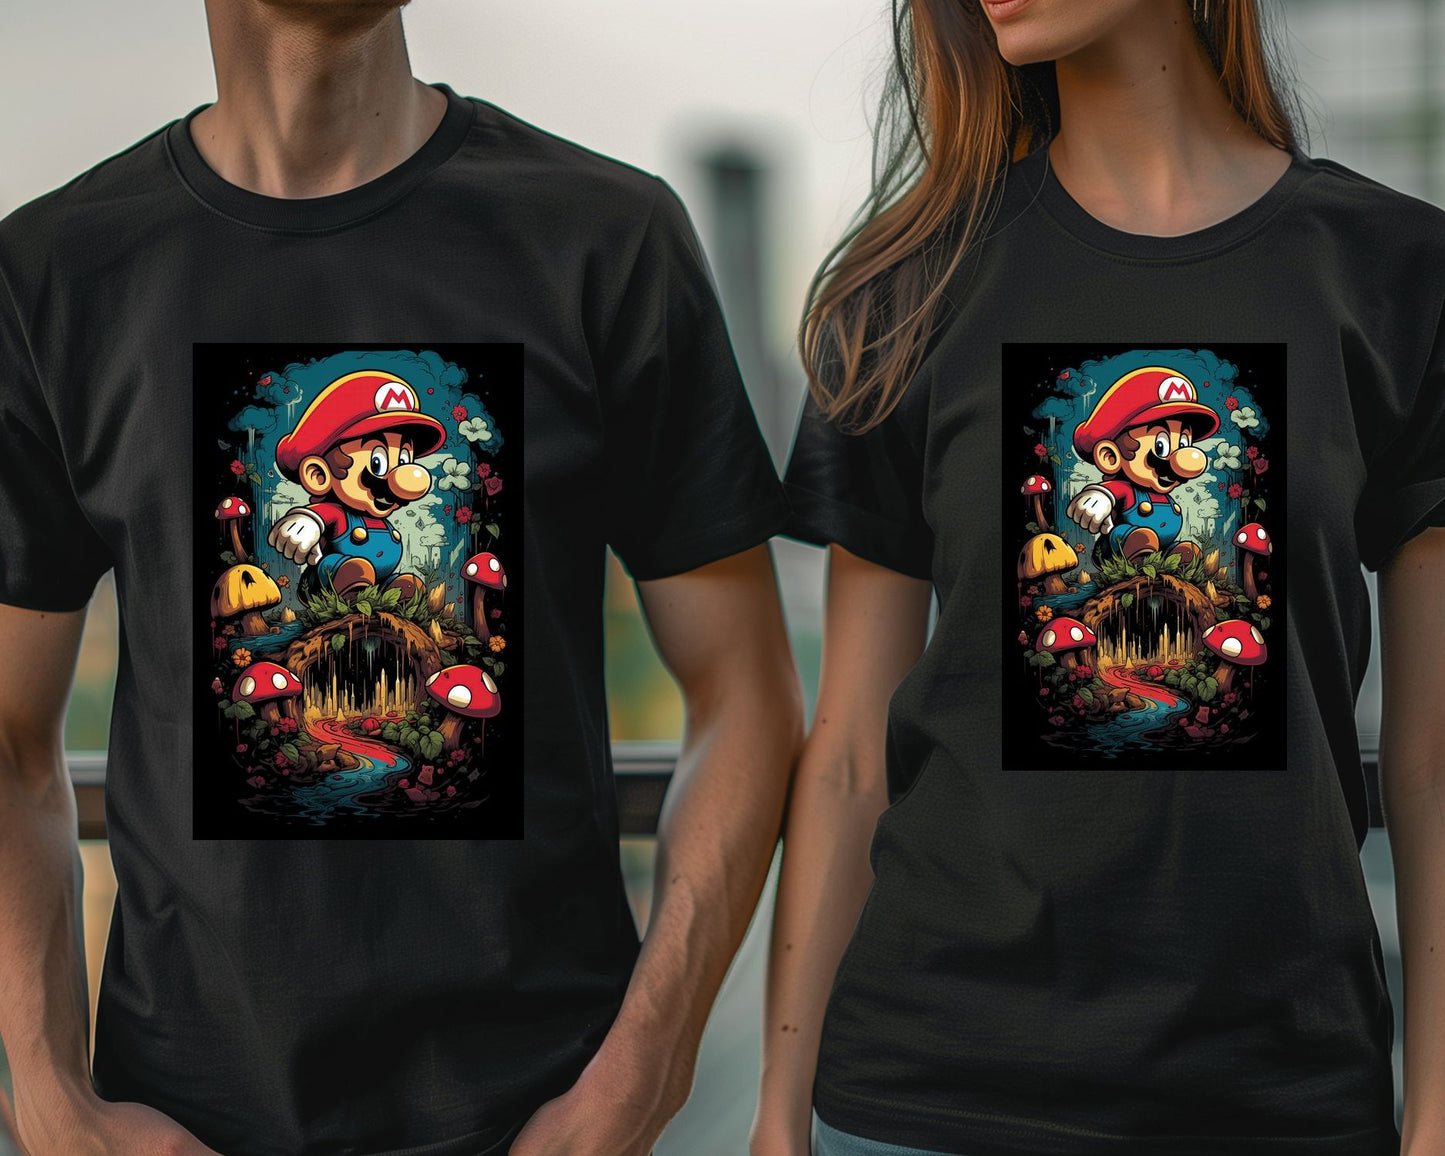 Mario the Heroes - @CupSturt